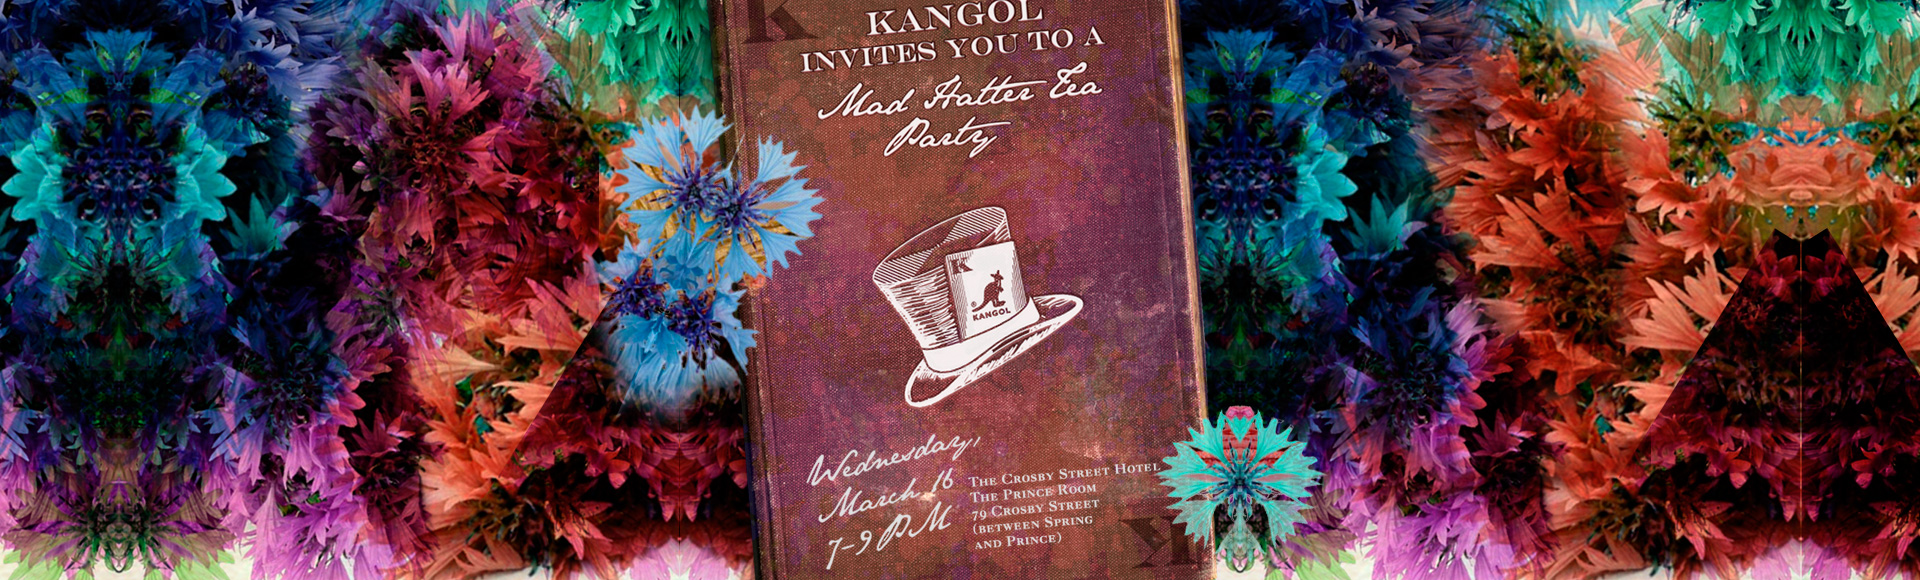 kangol event invitation graphic